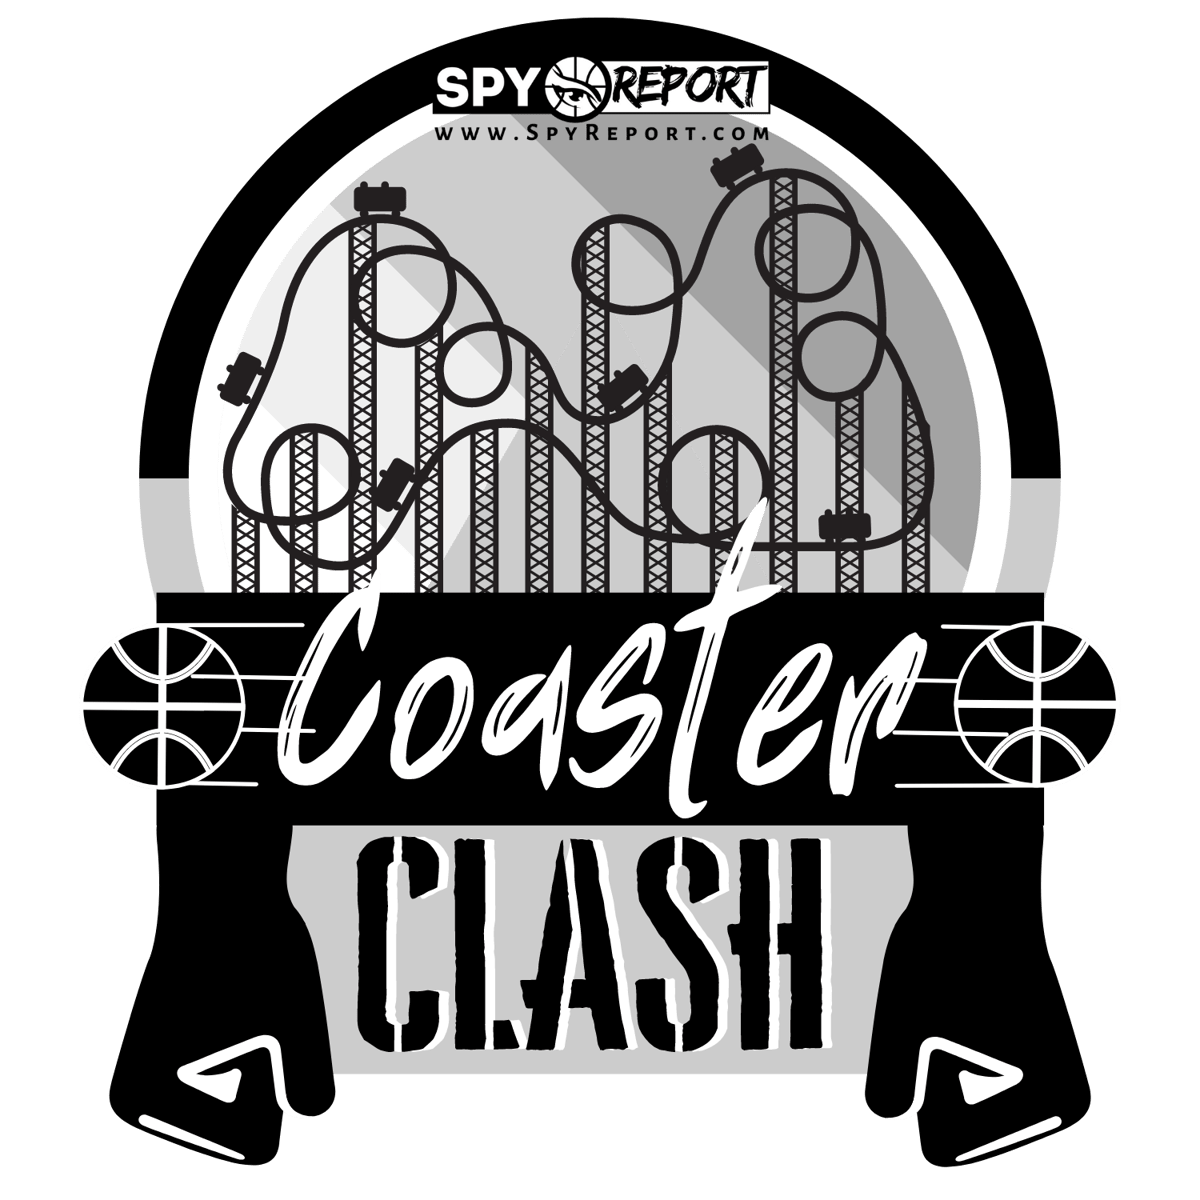 Coaster Clash Basketball